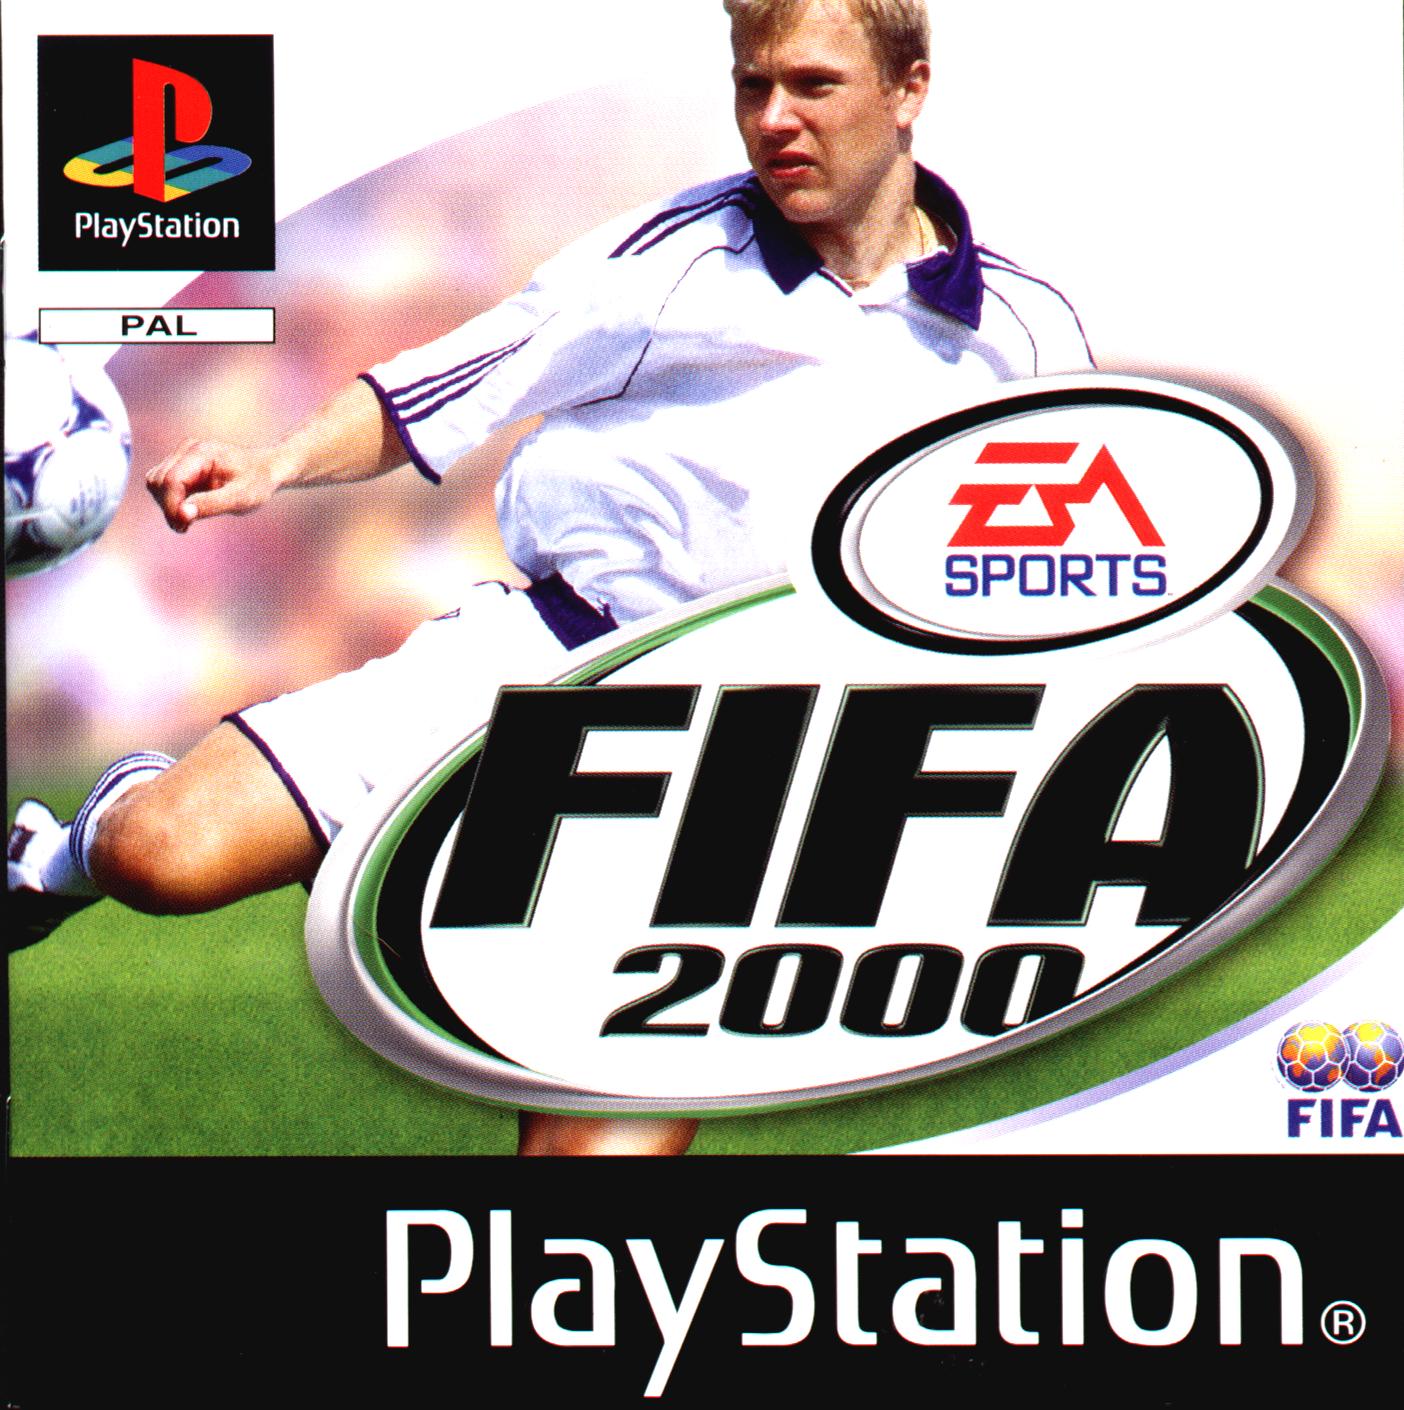 FIFA 2000 | Videogame soundtracks Wiki | Fandom powered by Wikia